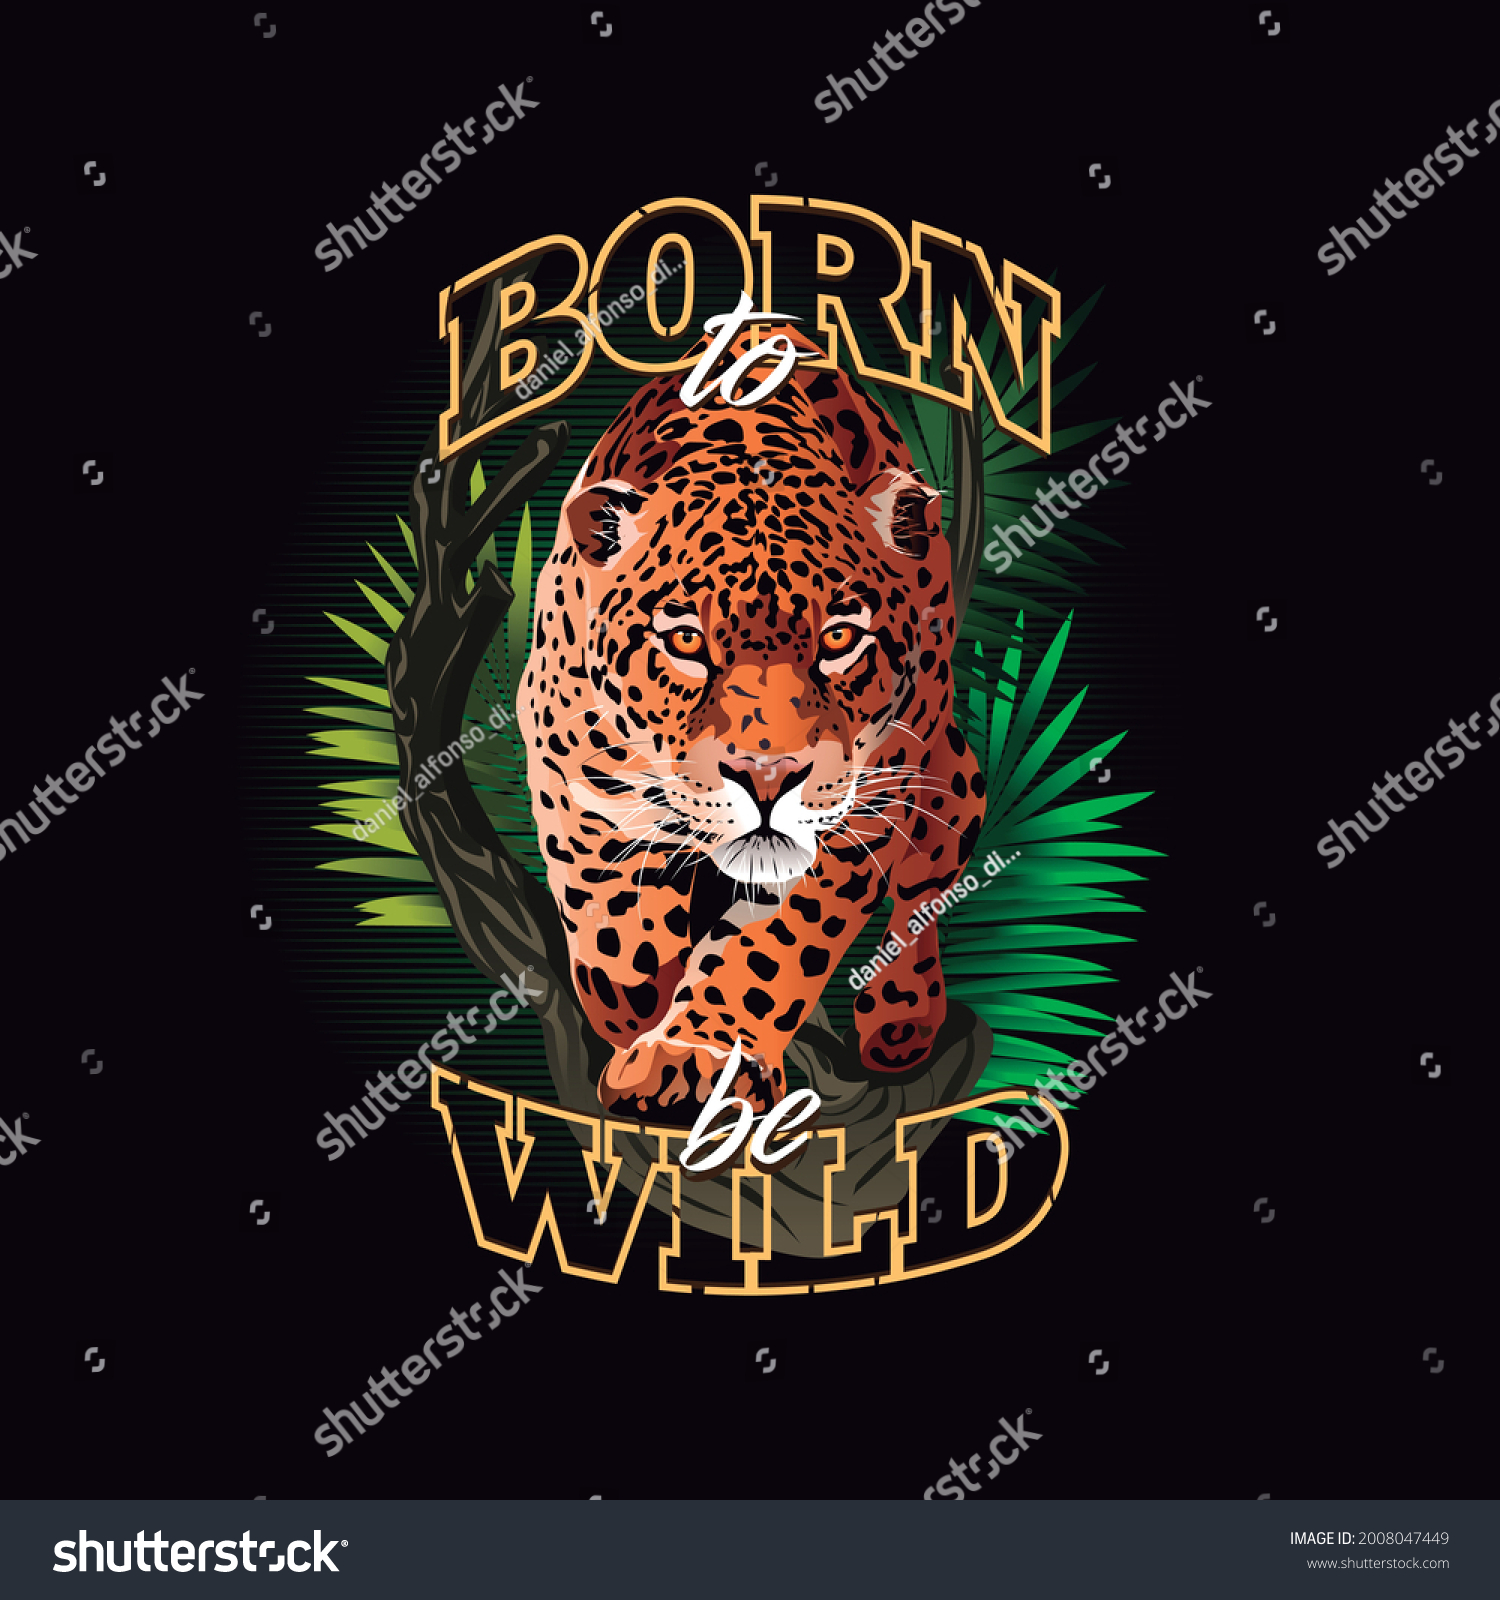 28 Arizona jaguar Images, Stock Photos & Vectors | Shutterstock